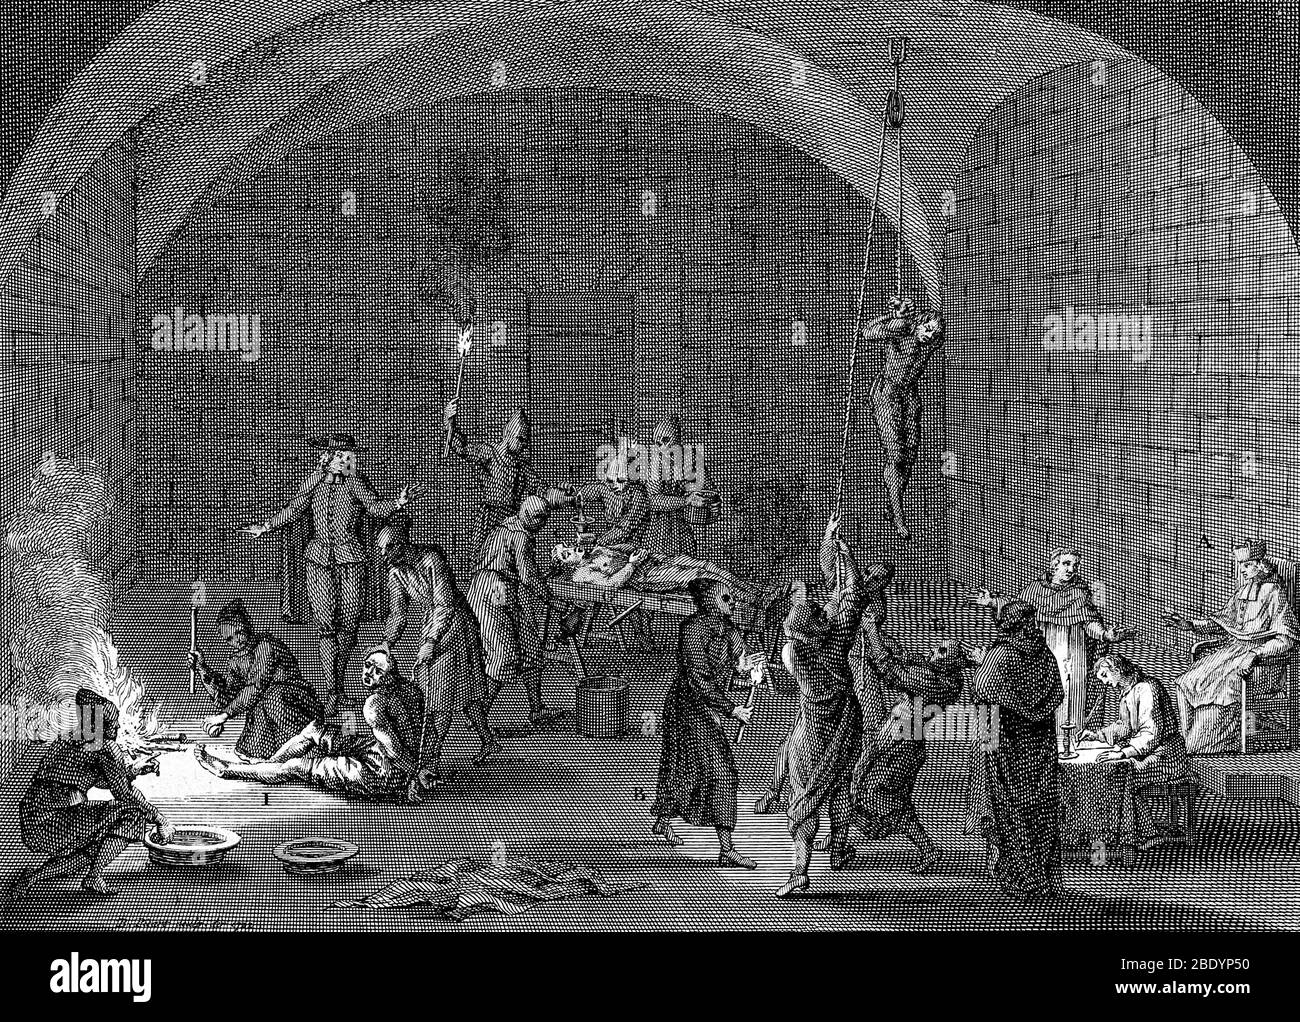 Spanish Inquisition, Torture Chamber Stock Photo